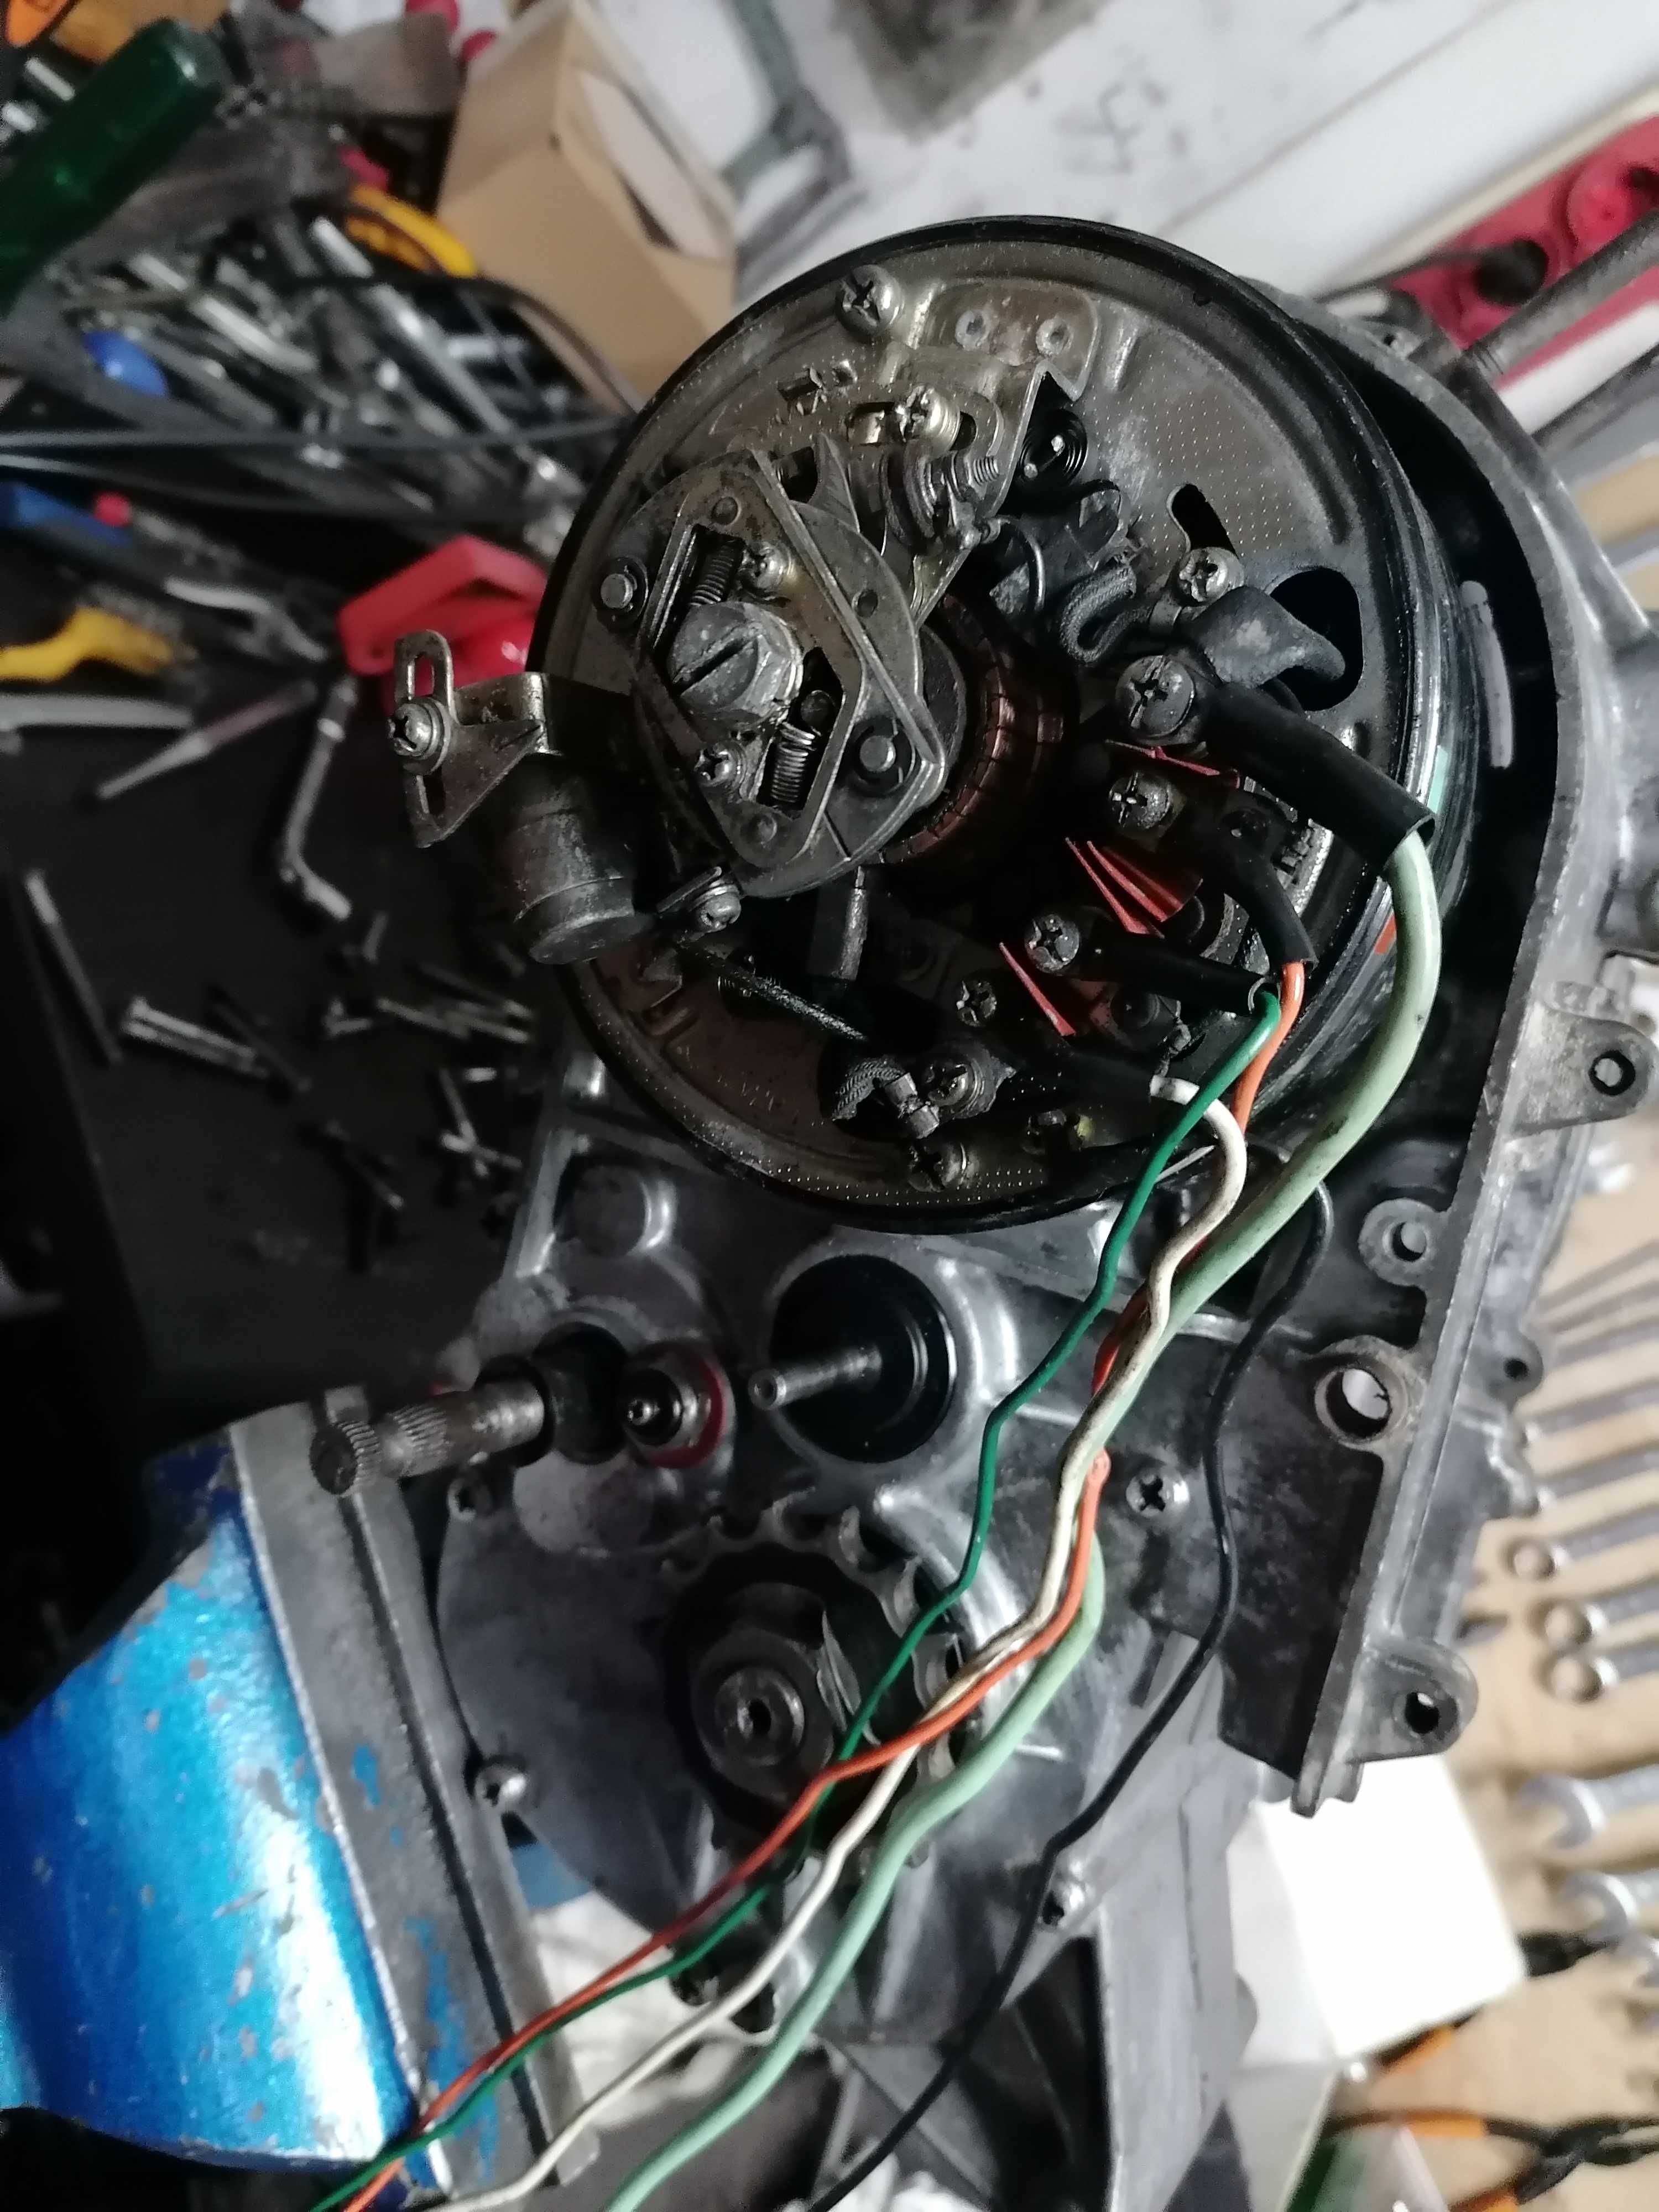 Motor Yamaha A7 reparado